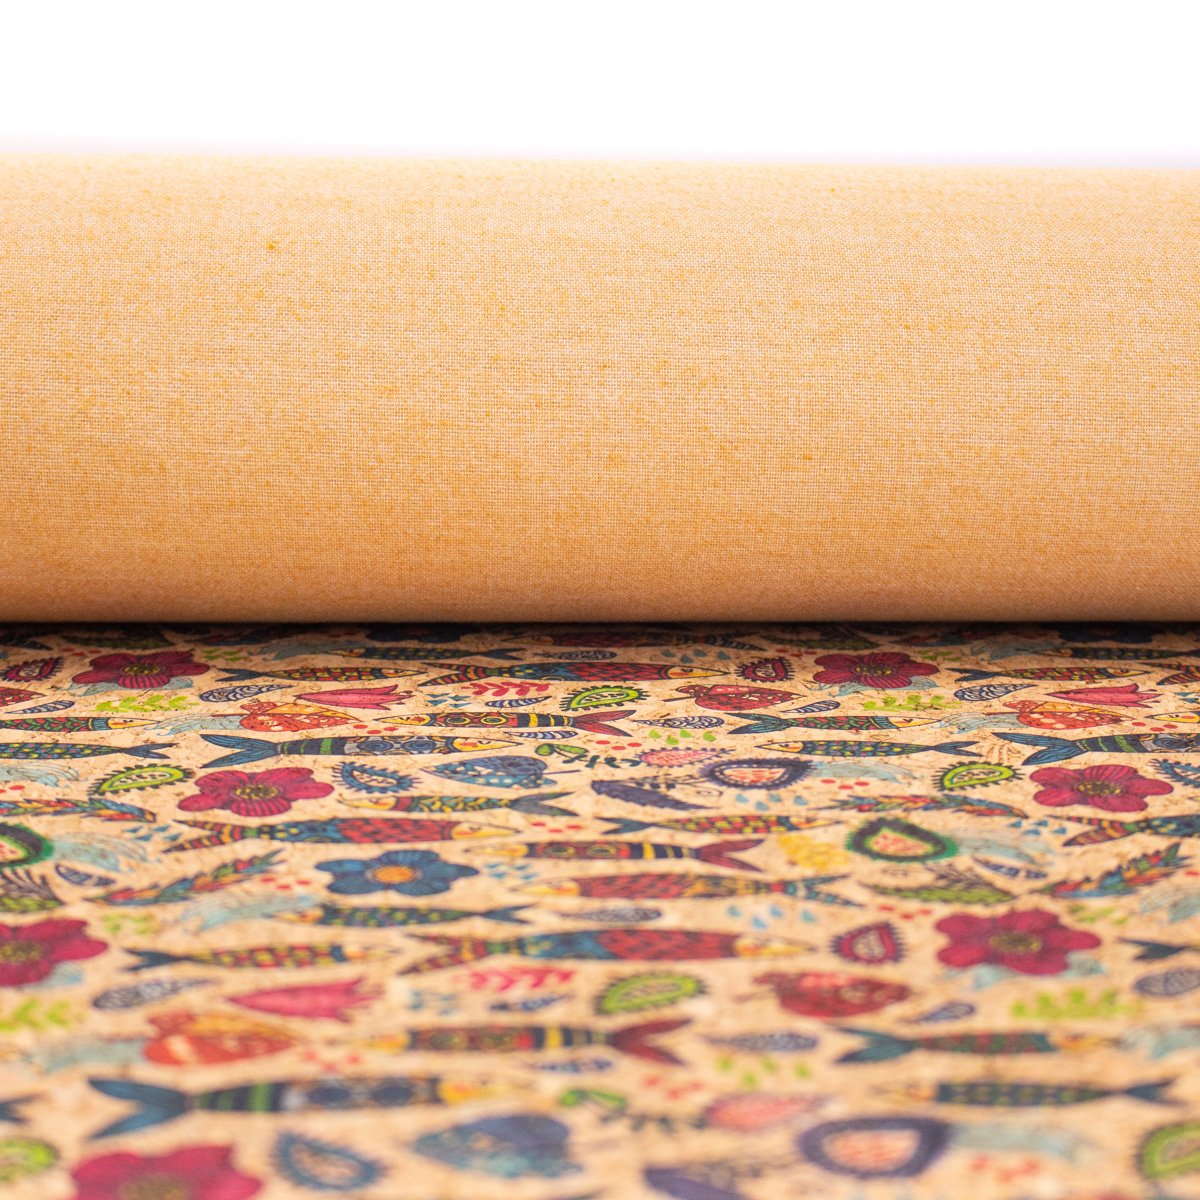 Fish & Flower Pattern Natural Cork Vegan Fabric | THE CORK COLLECTION